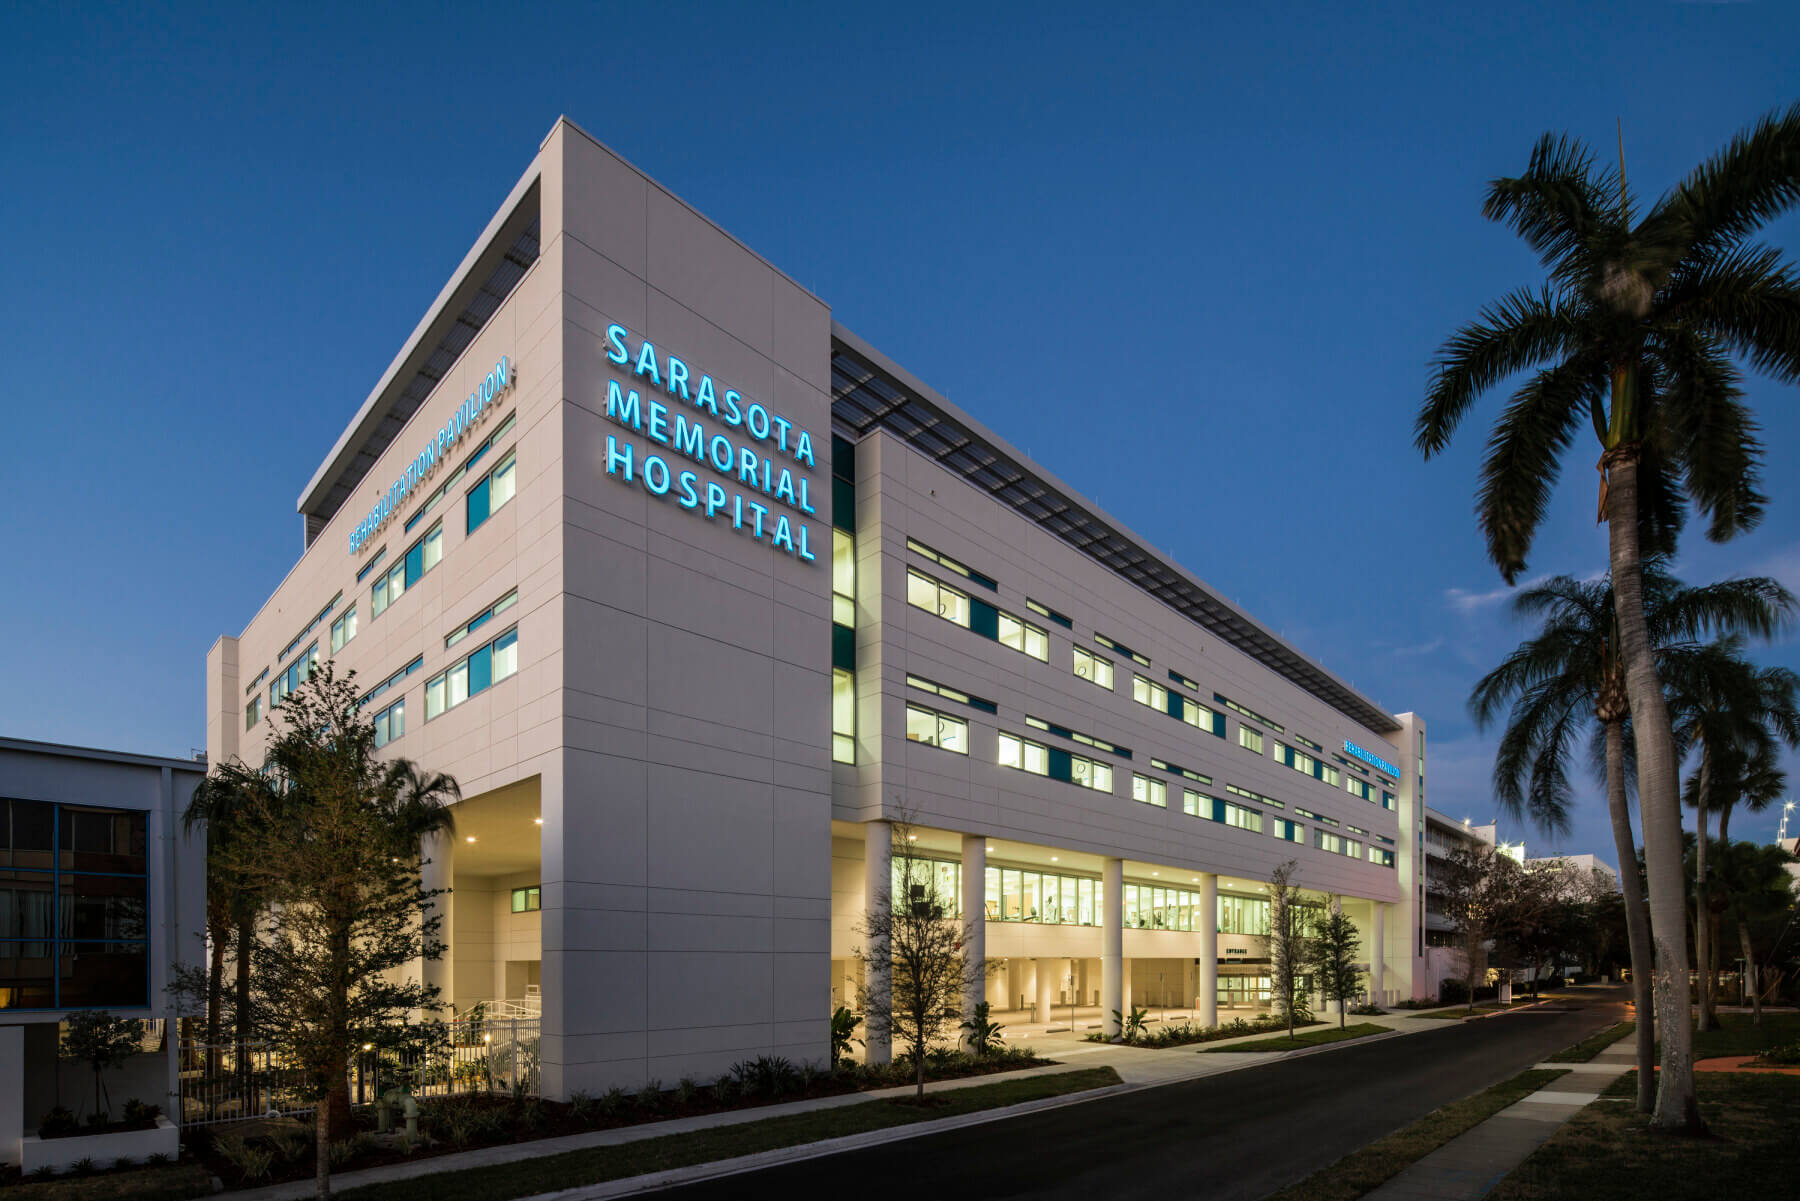 the exterior of the four-story rehabilitation addition at Sarasota Memorial Hospital